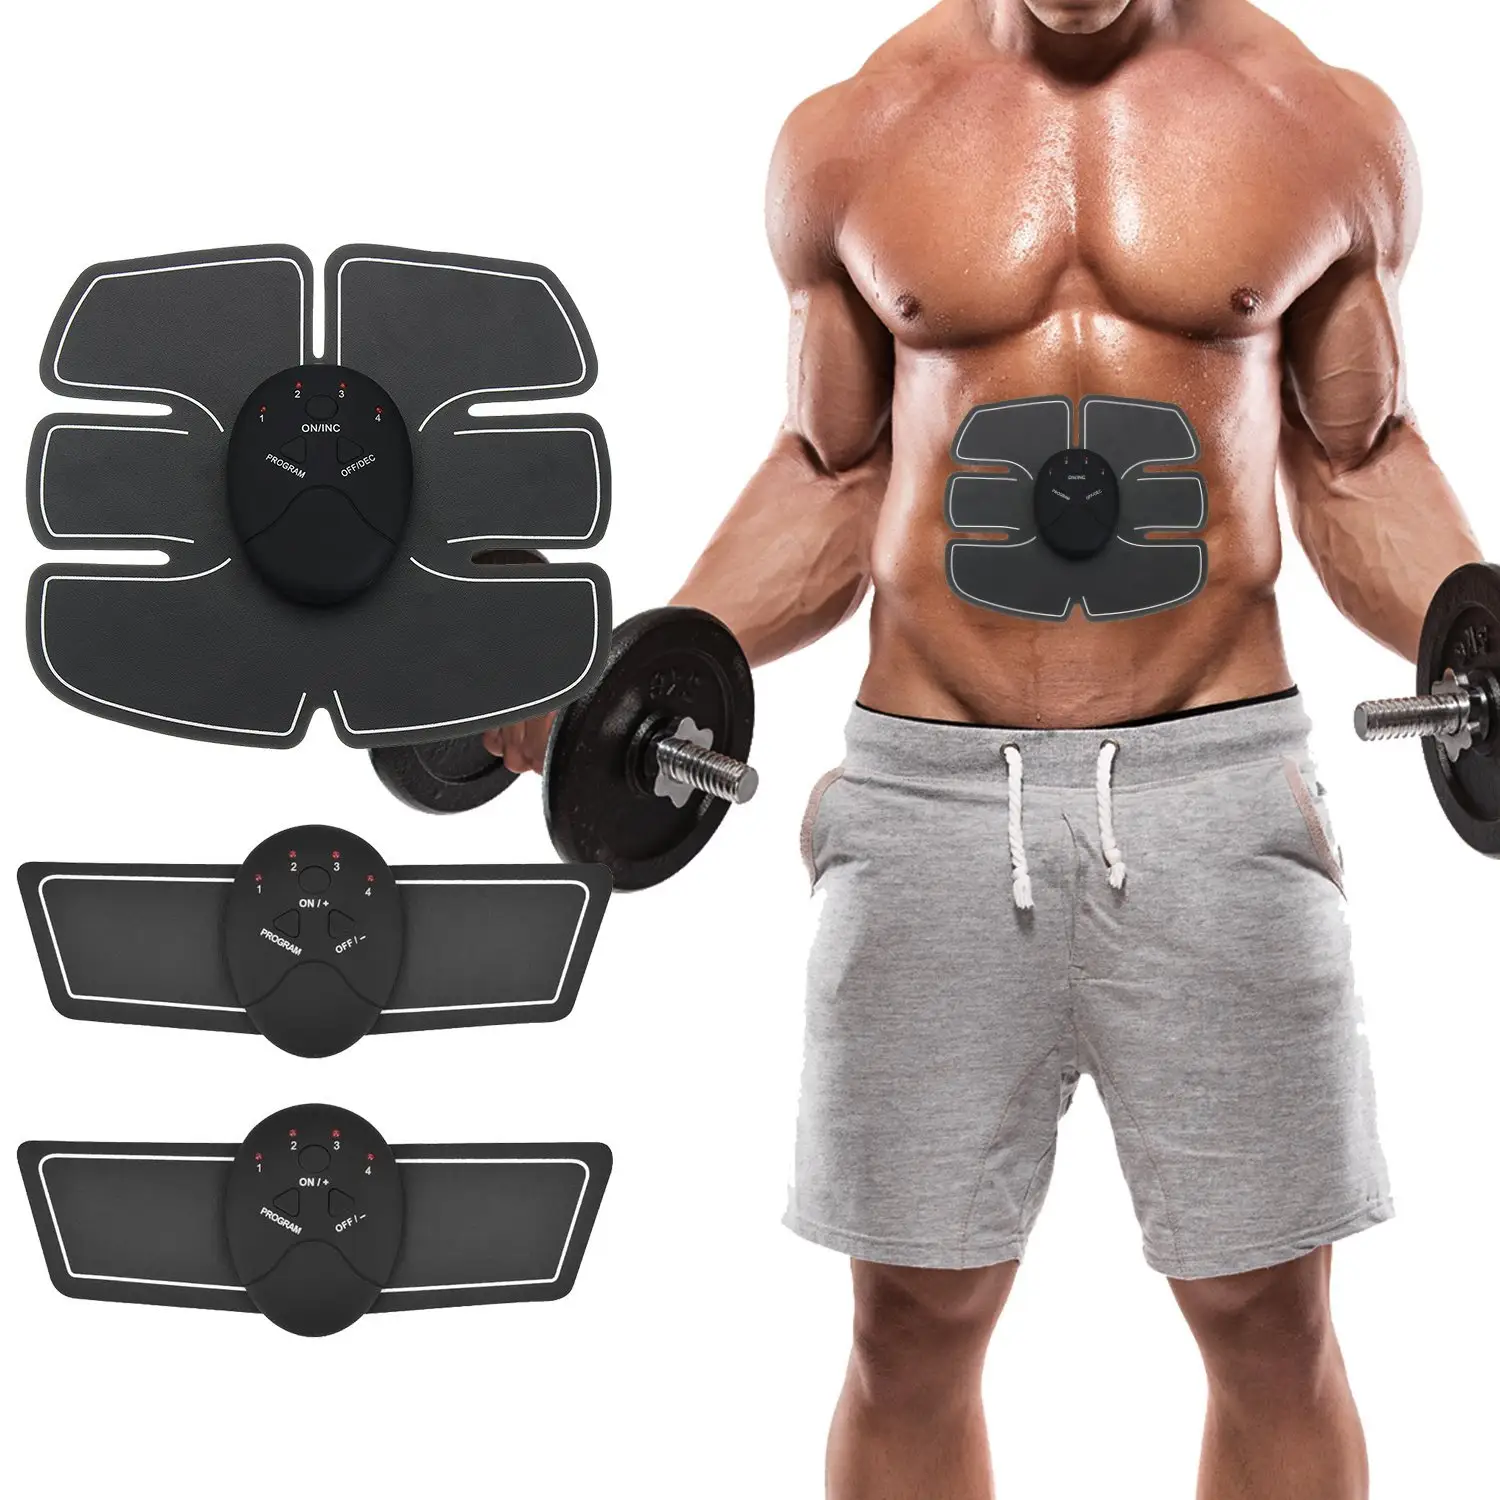 Estimulador muscular eléctrico Abs Ems, cinturón adelgazante, masajeador de tóner abdominal